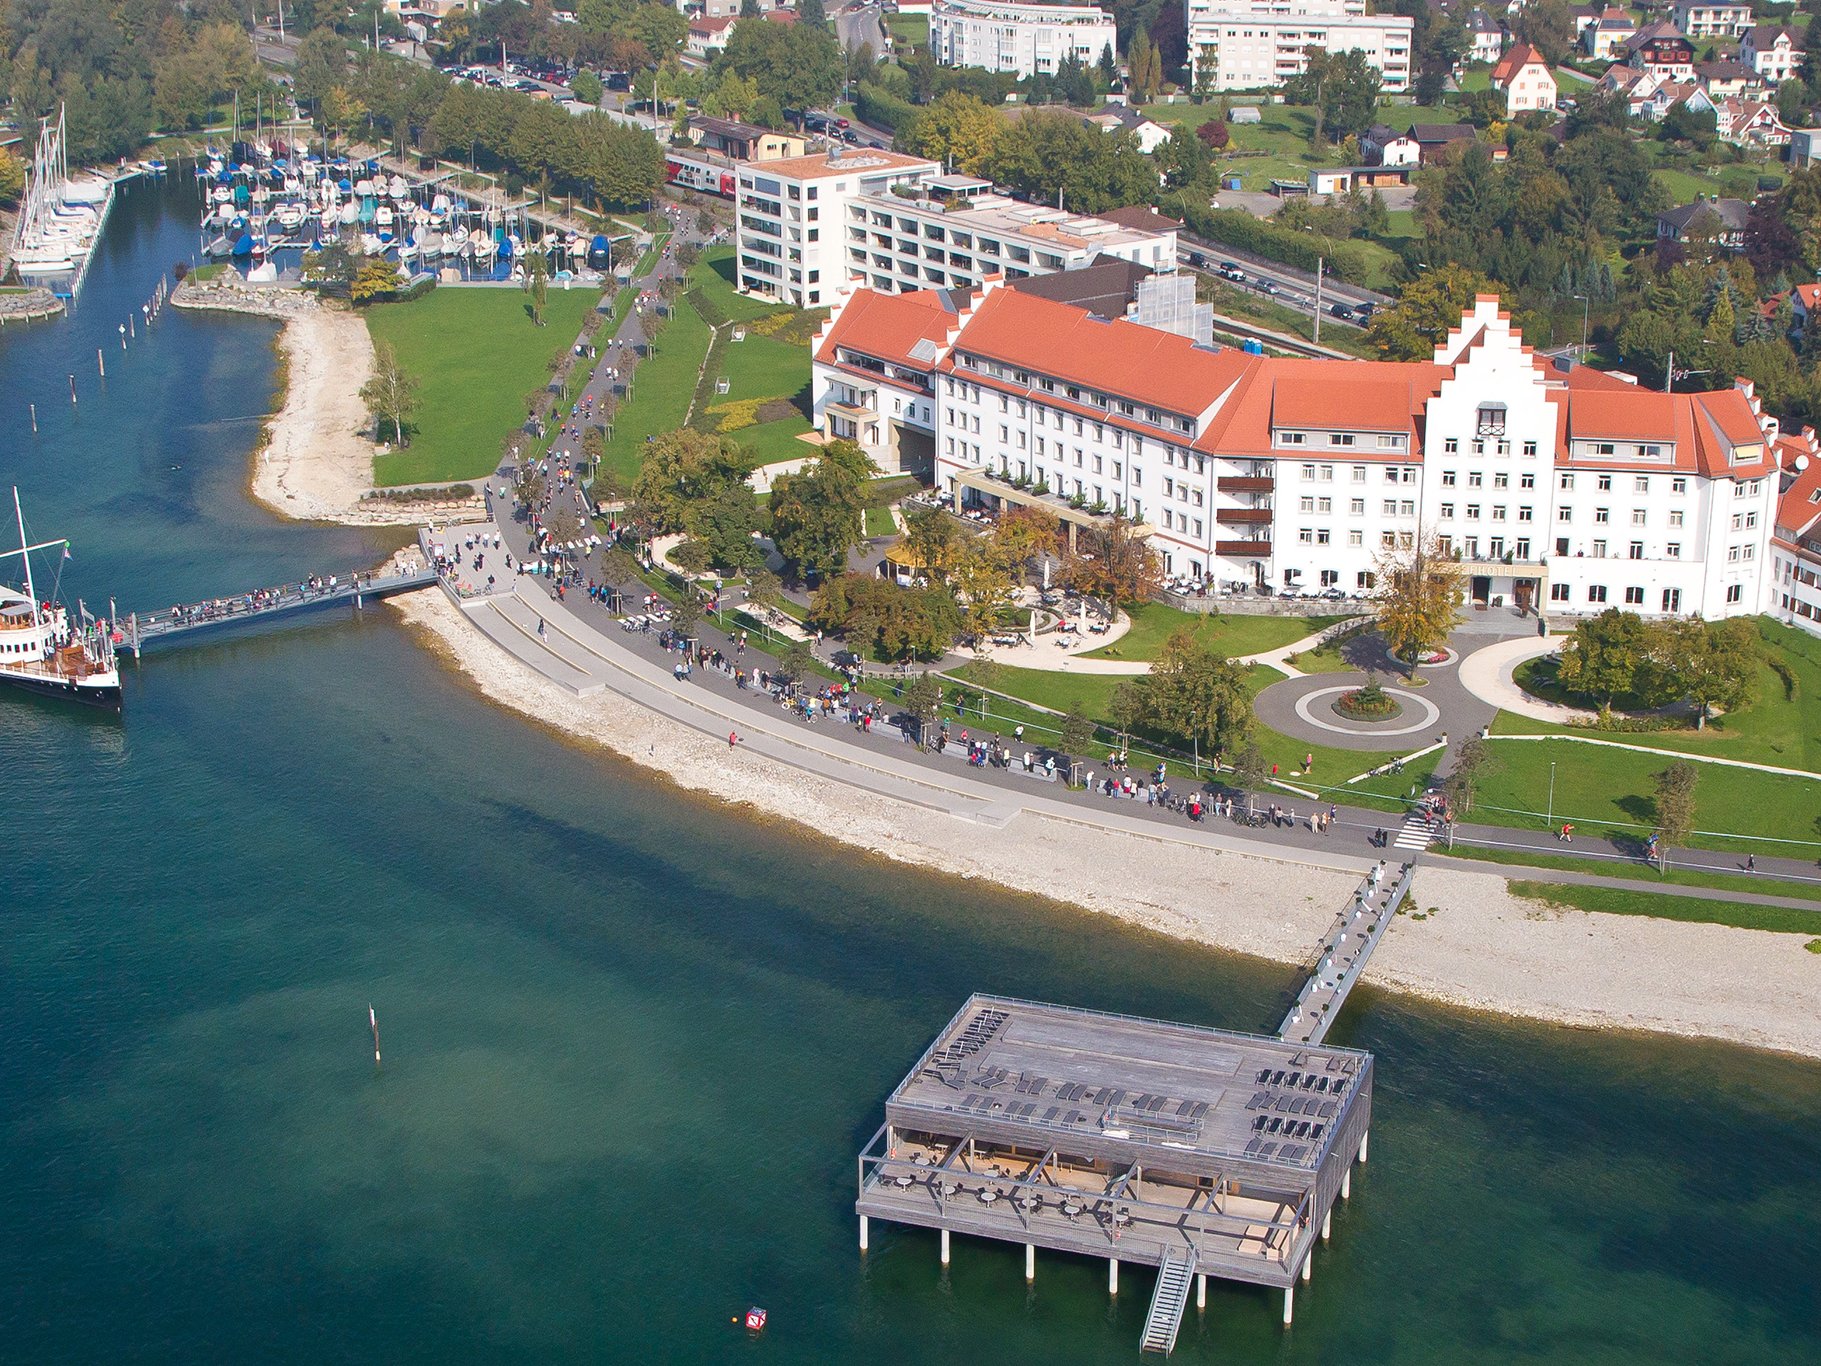 Hotel Kaiserstrand am Bodensee.